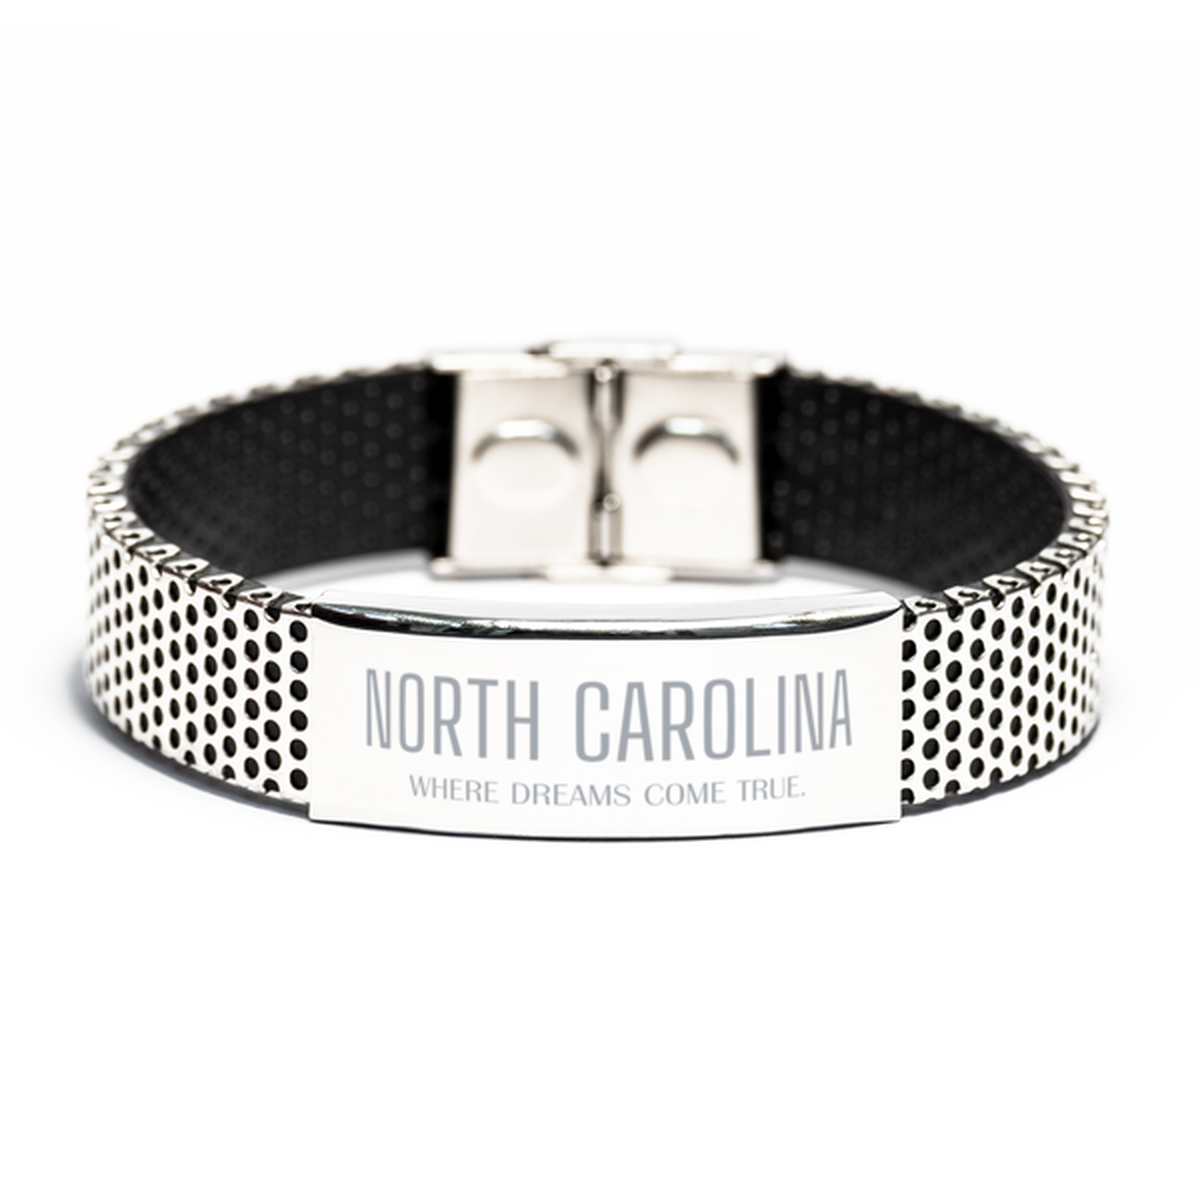 Love North Carolina State Stainless Steel Bracelet, North Carolina Where dreams come true, Birthday Inspirational Gifts For North Carolina Men, Women, Friends